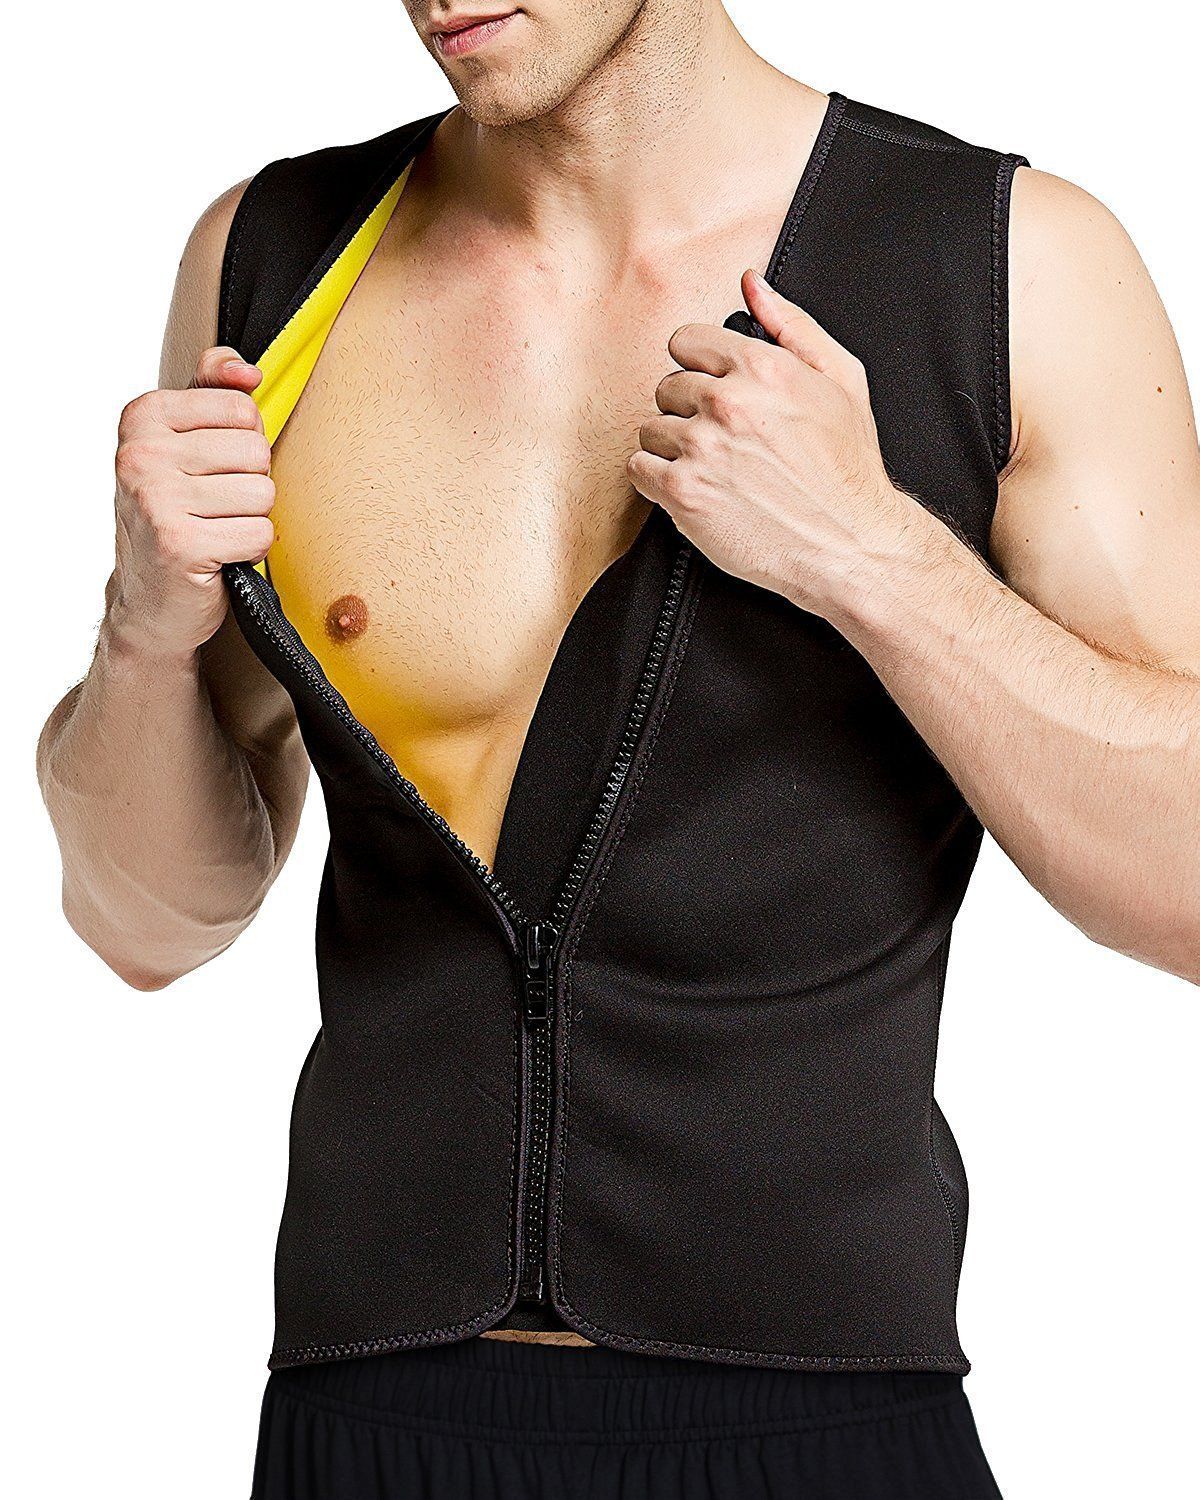 Men's Waist Training Zip Up Sauna Vest - Tone Up Fast! - thewaistpros.com - 